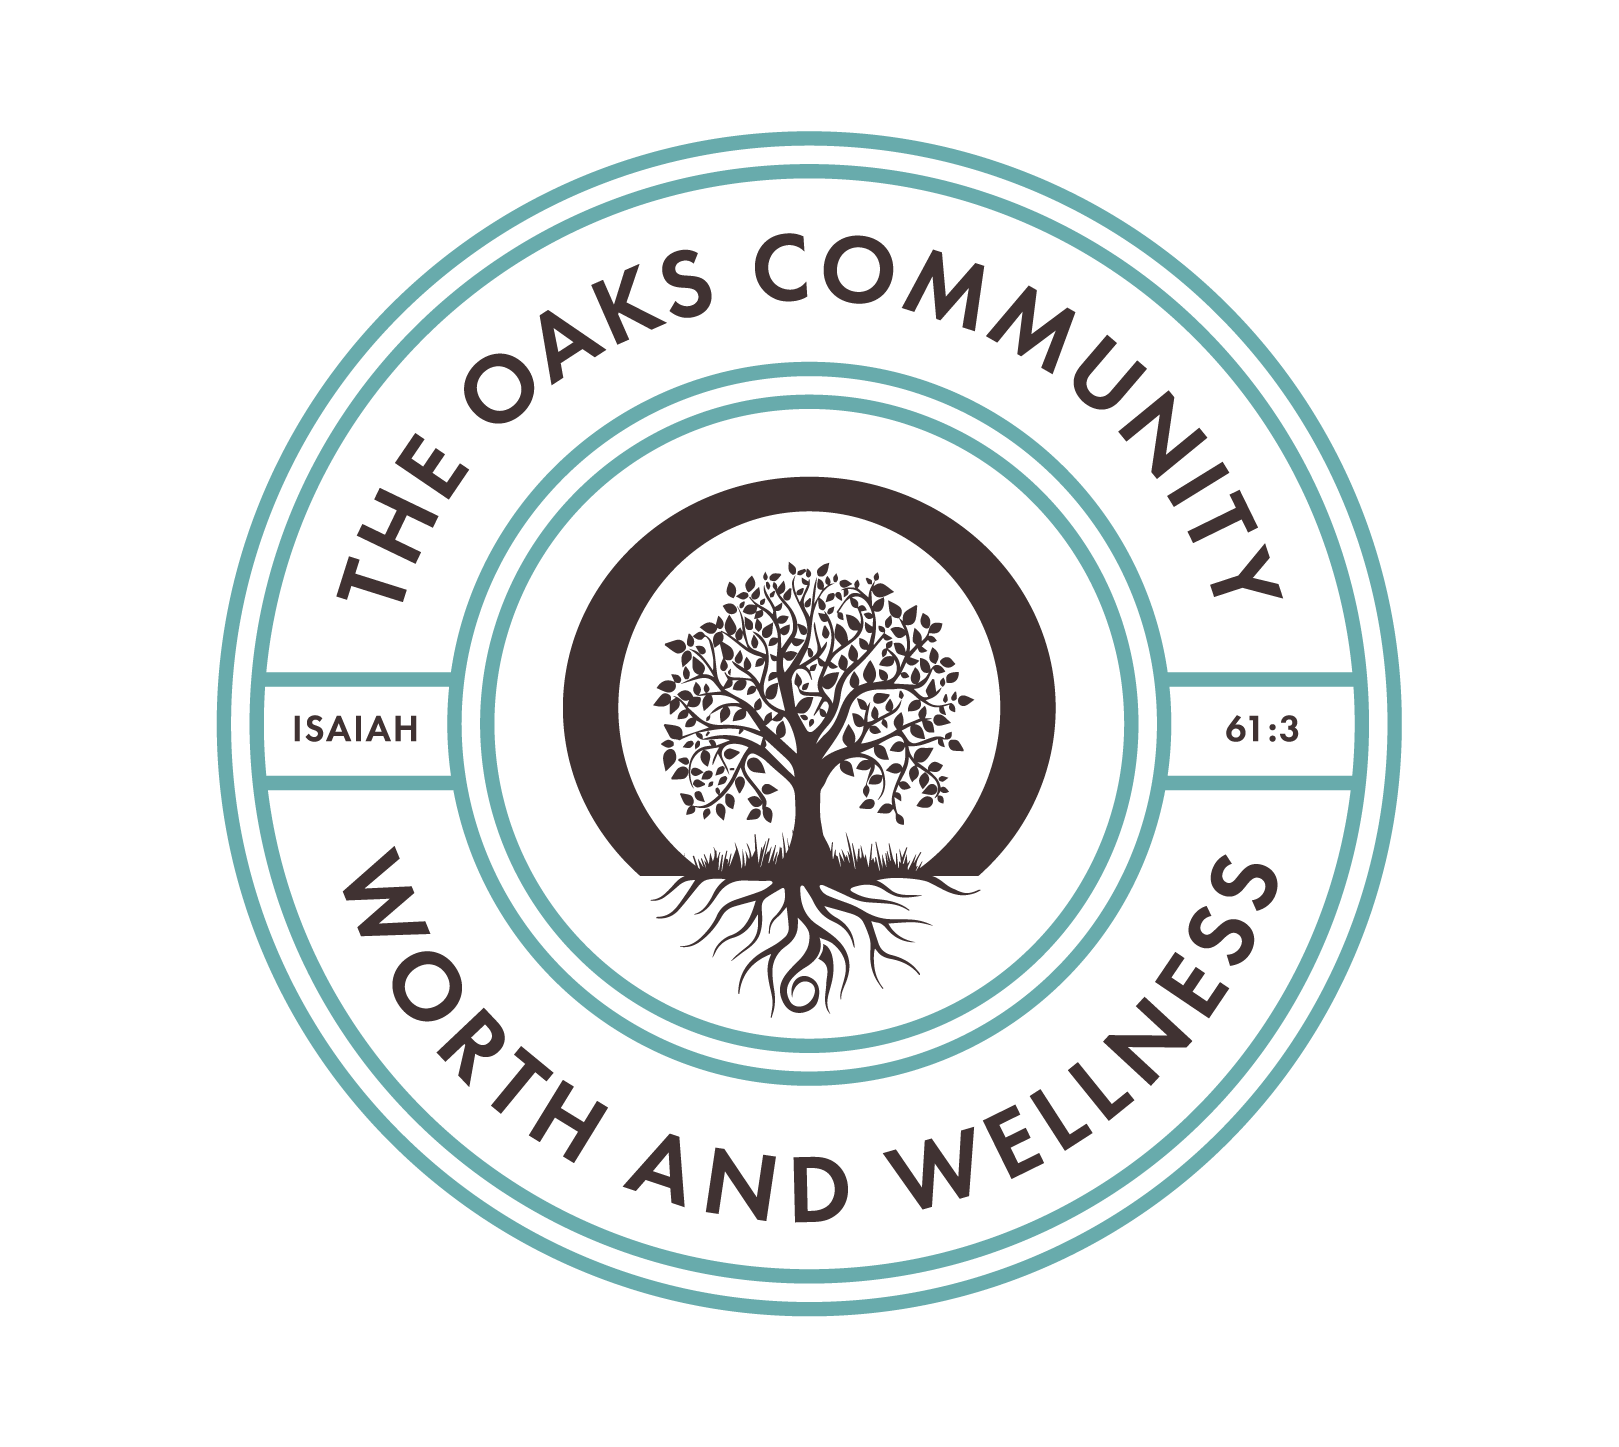 The Oaks Community